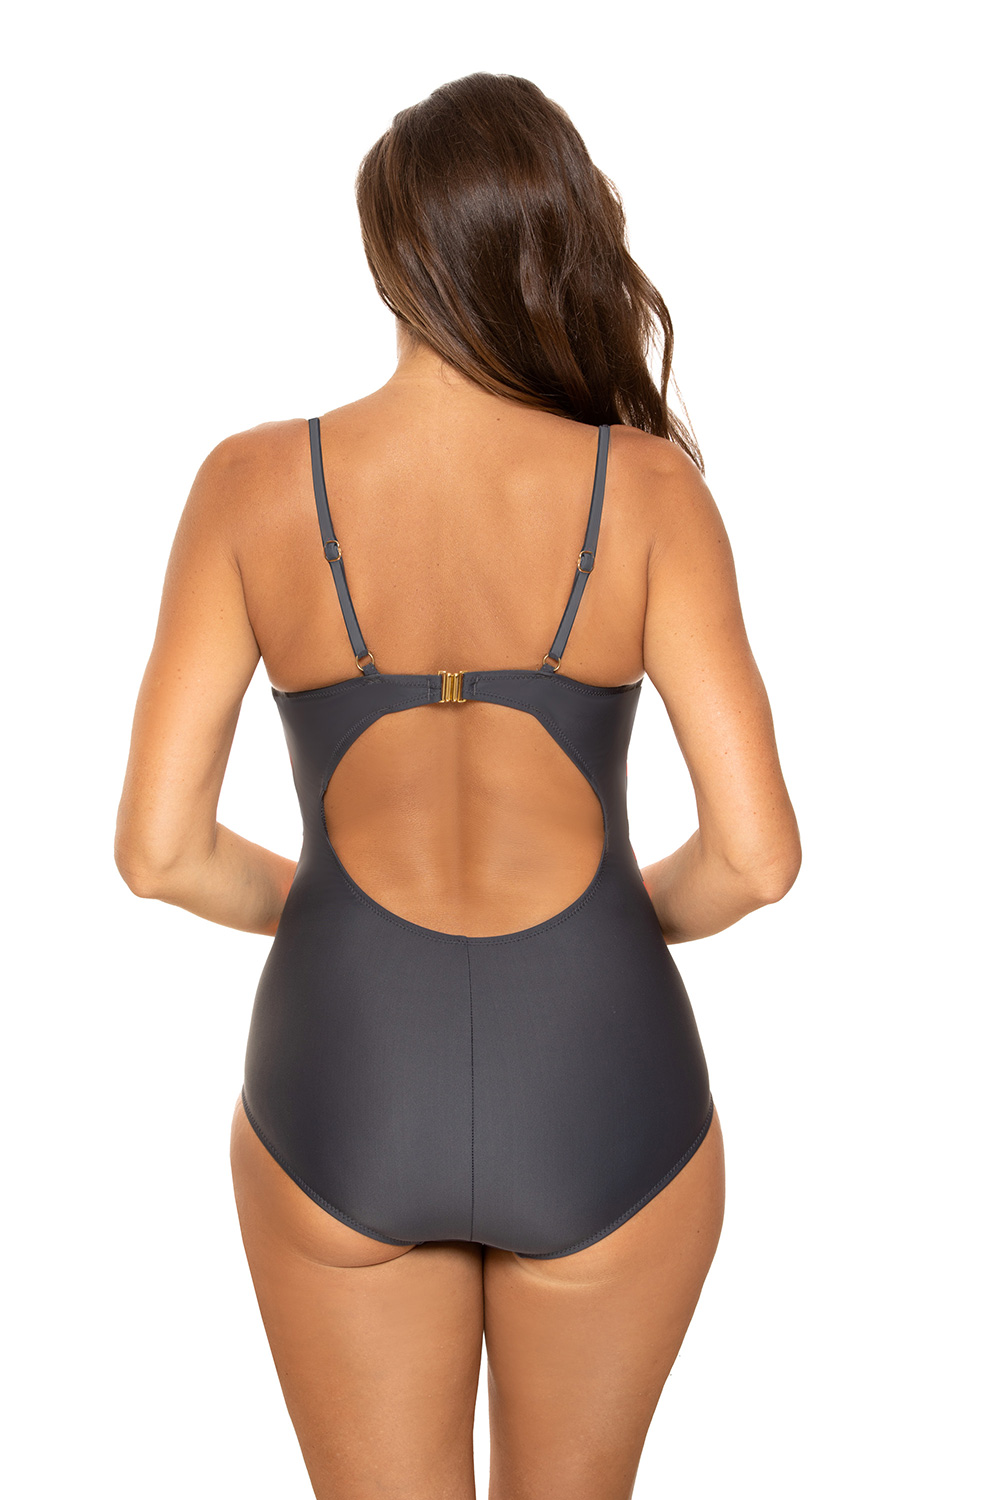 Swimsuit one piece model 165733 Marko grey Ladies